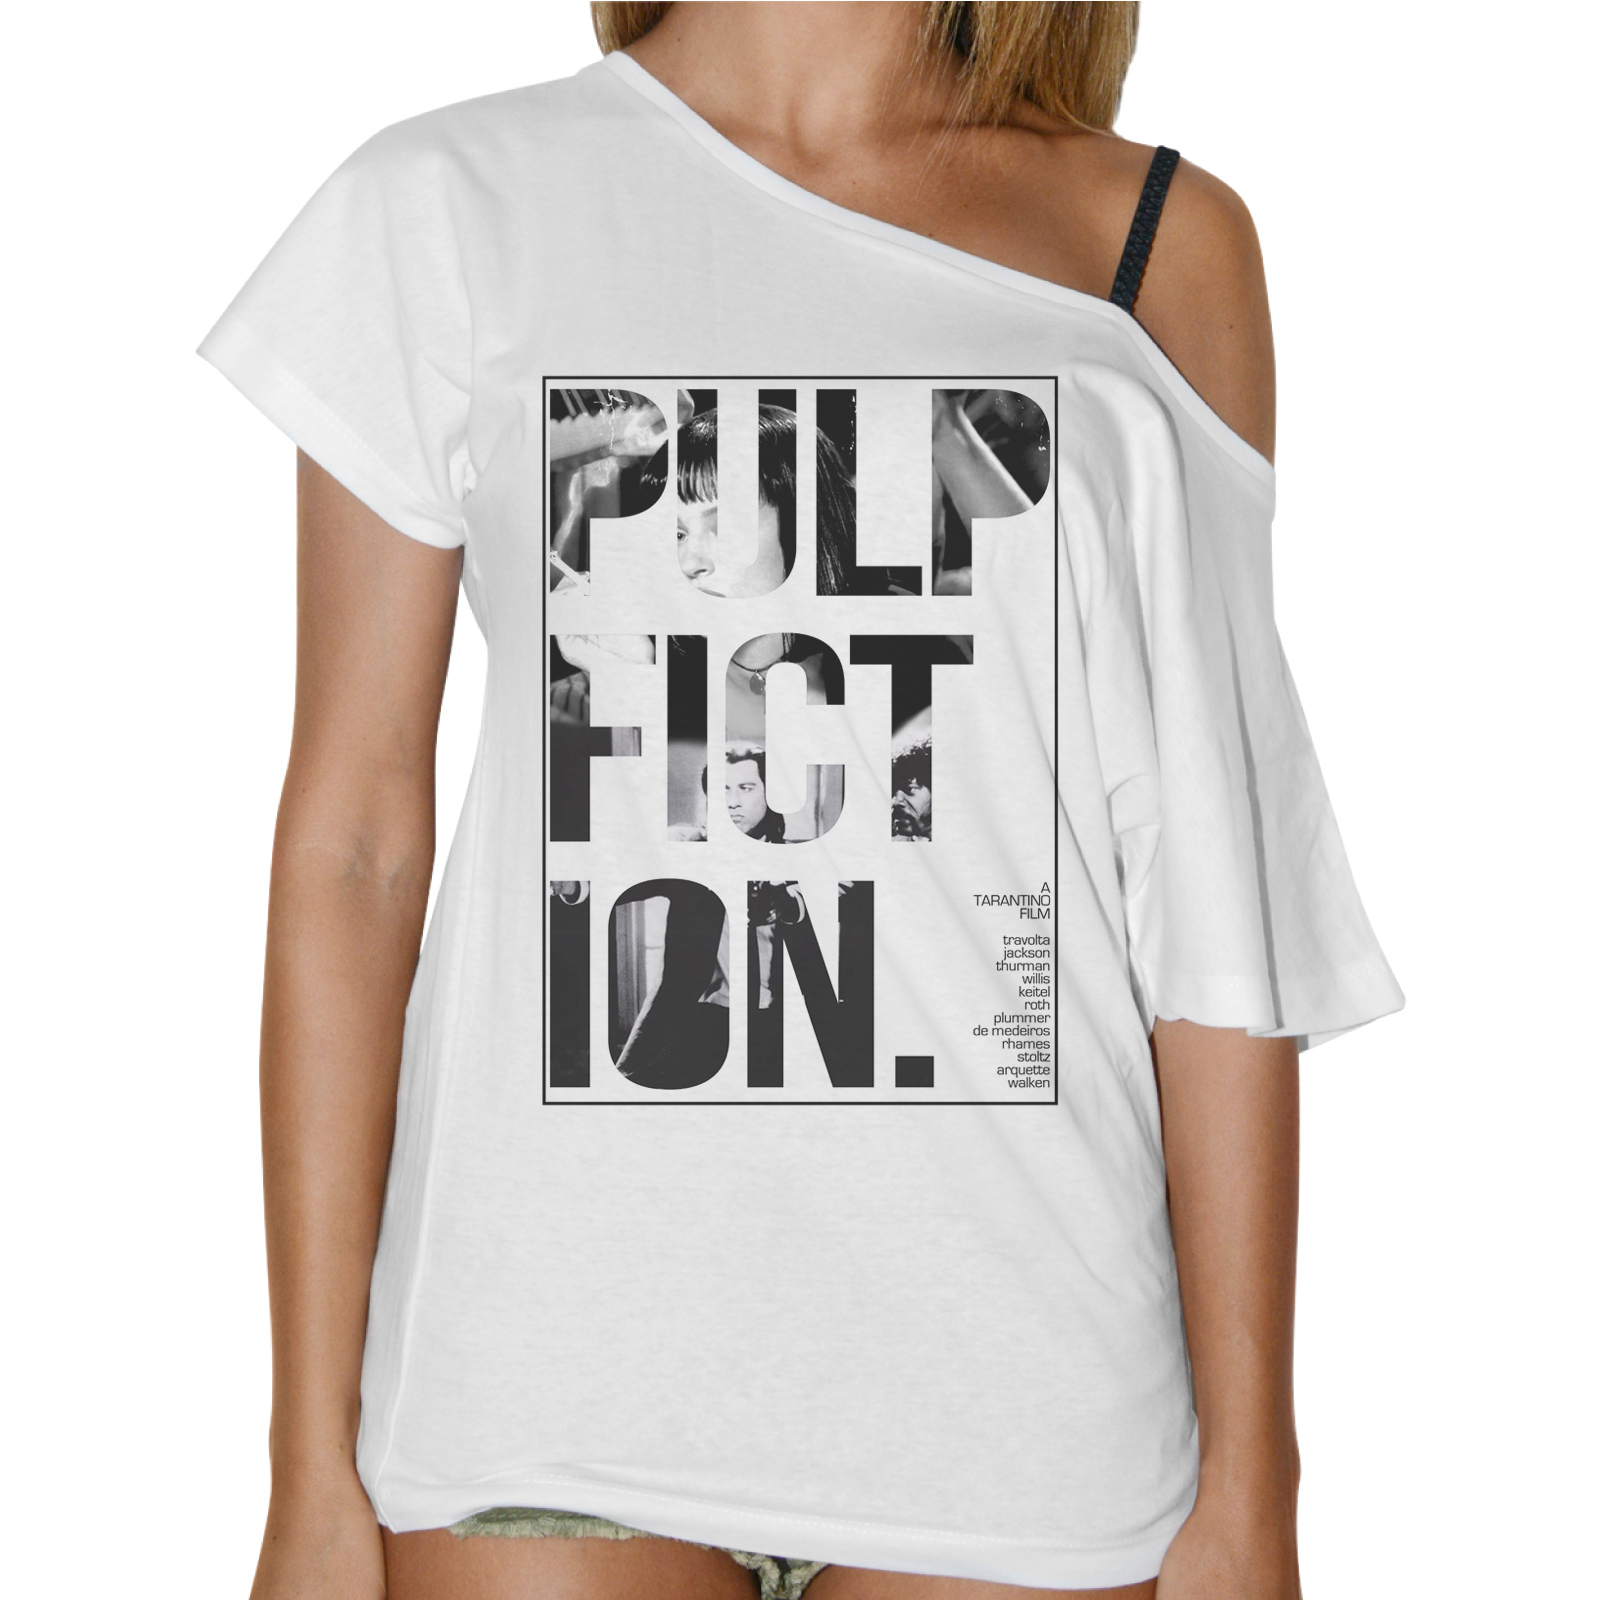 T-Shirt Donna Collo Barca PULP FICTION 1